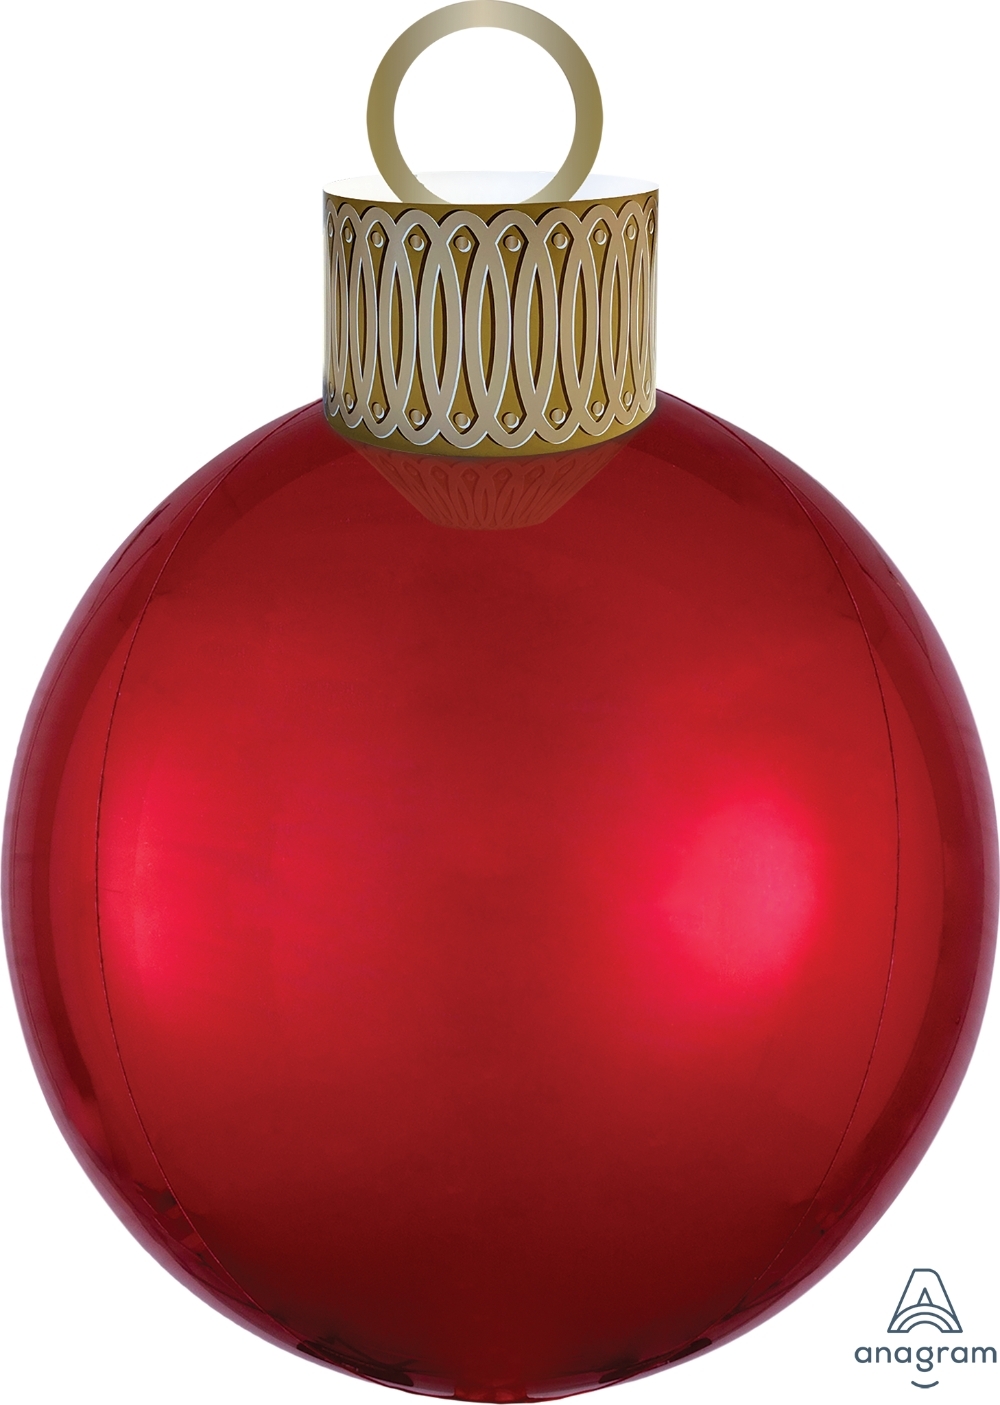 Red Orbz Ornament Kit balloon